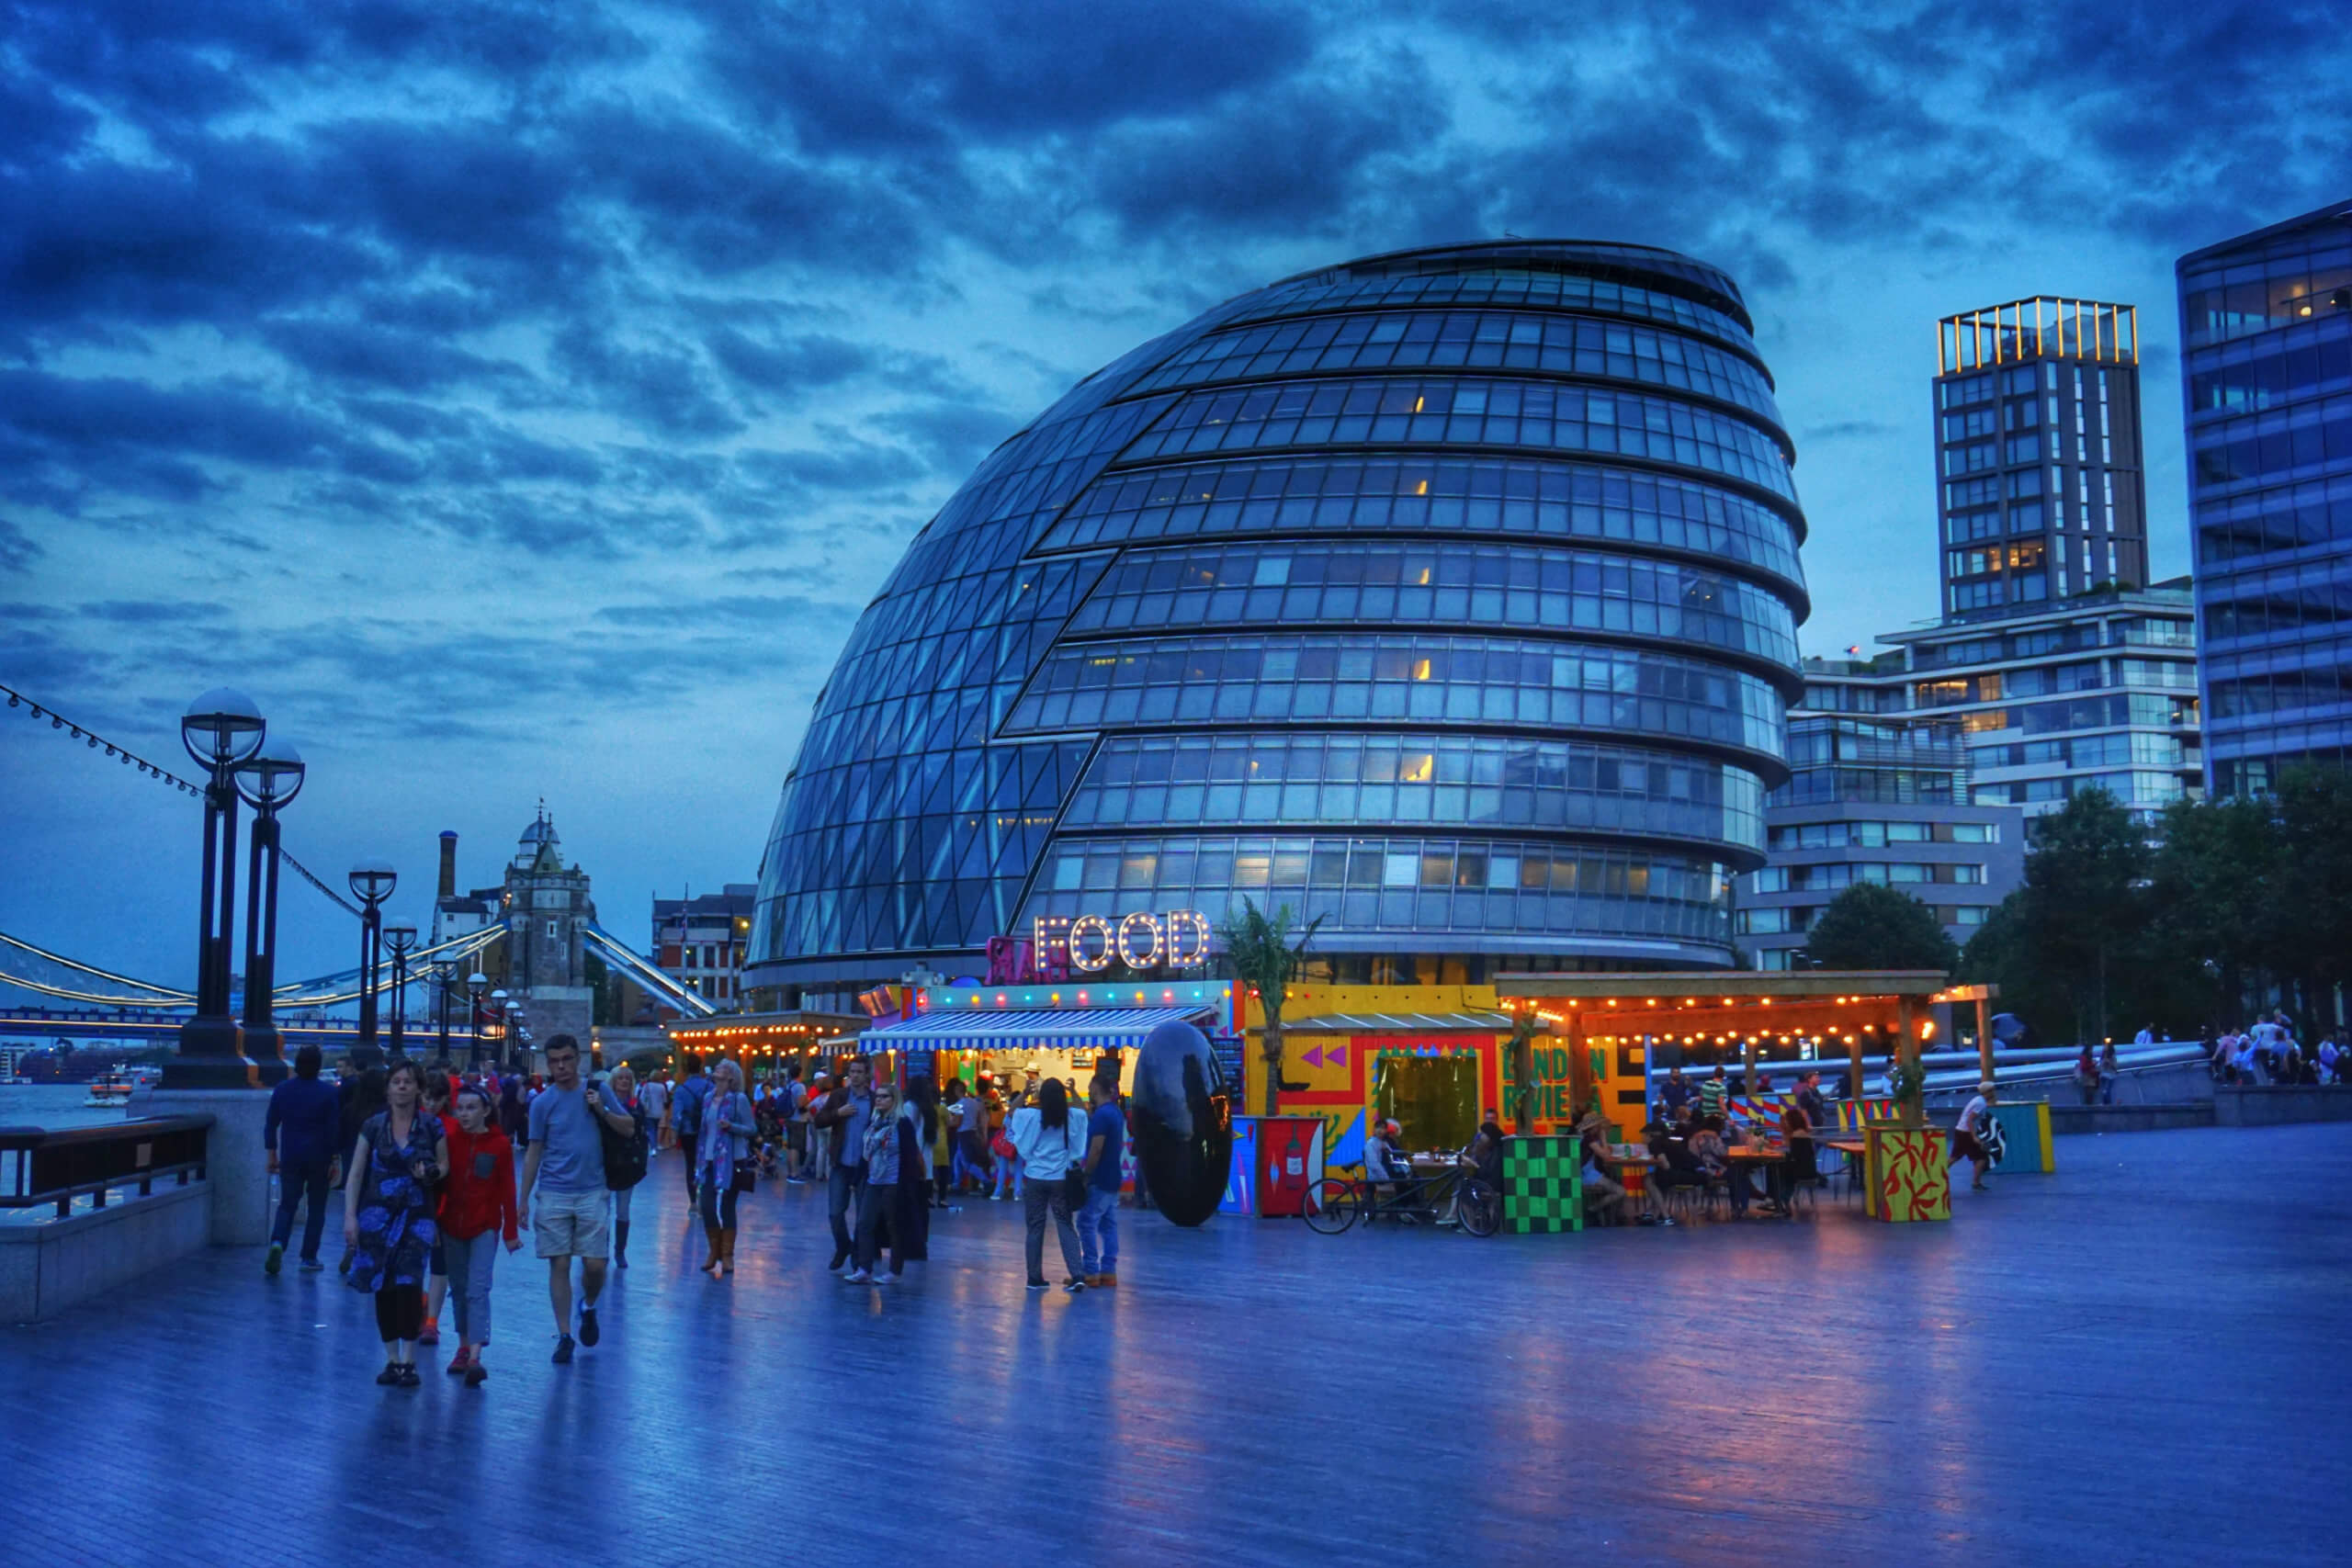 London City Hall, a glassy, egg-shaped building